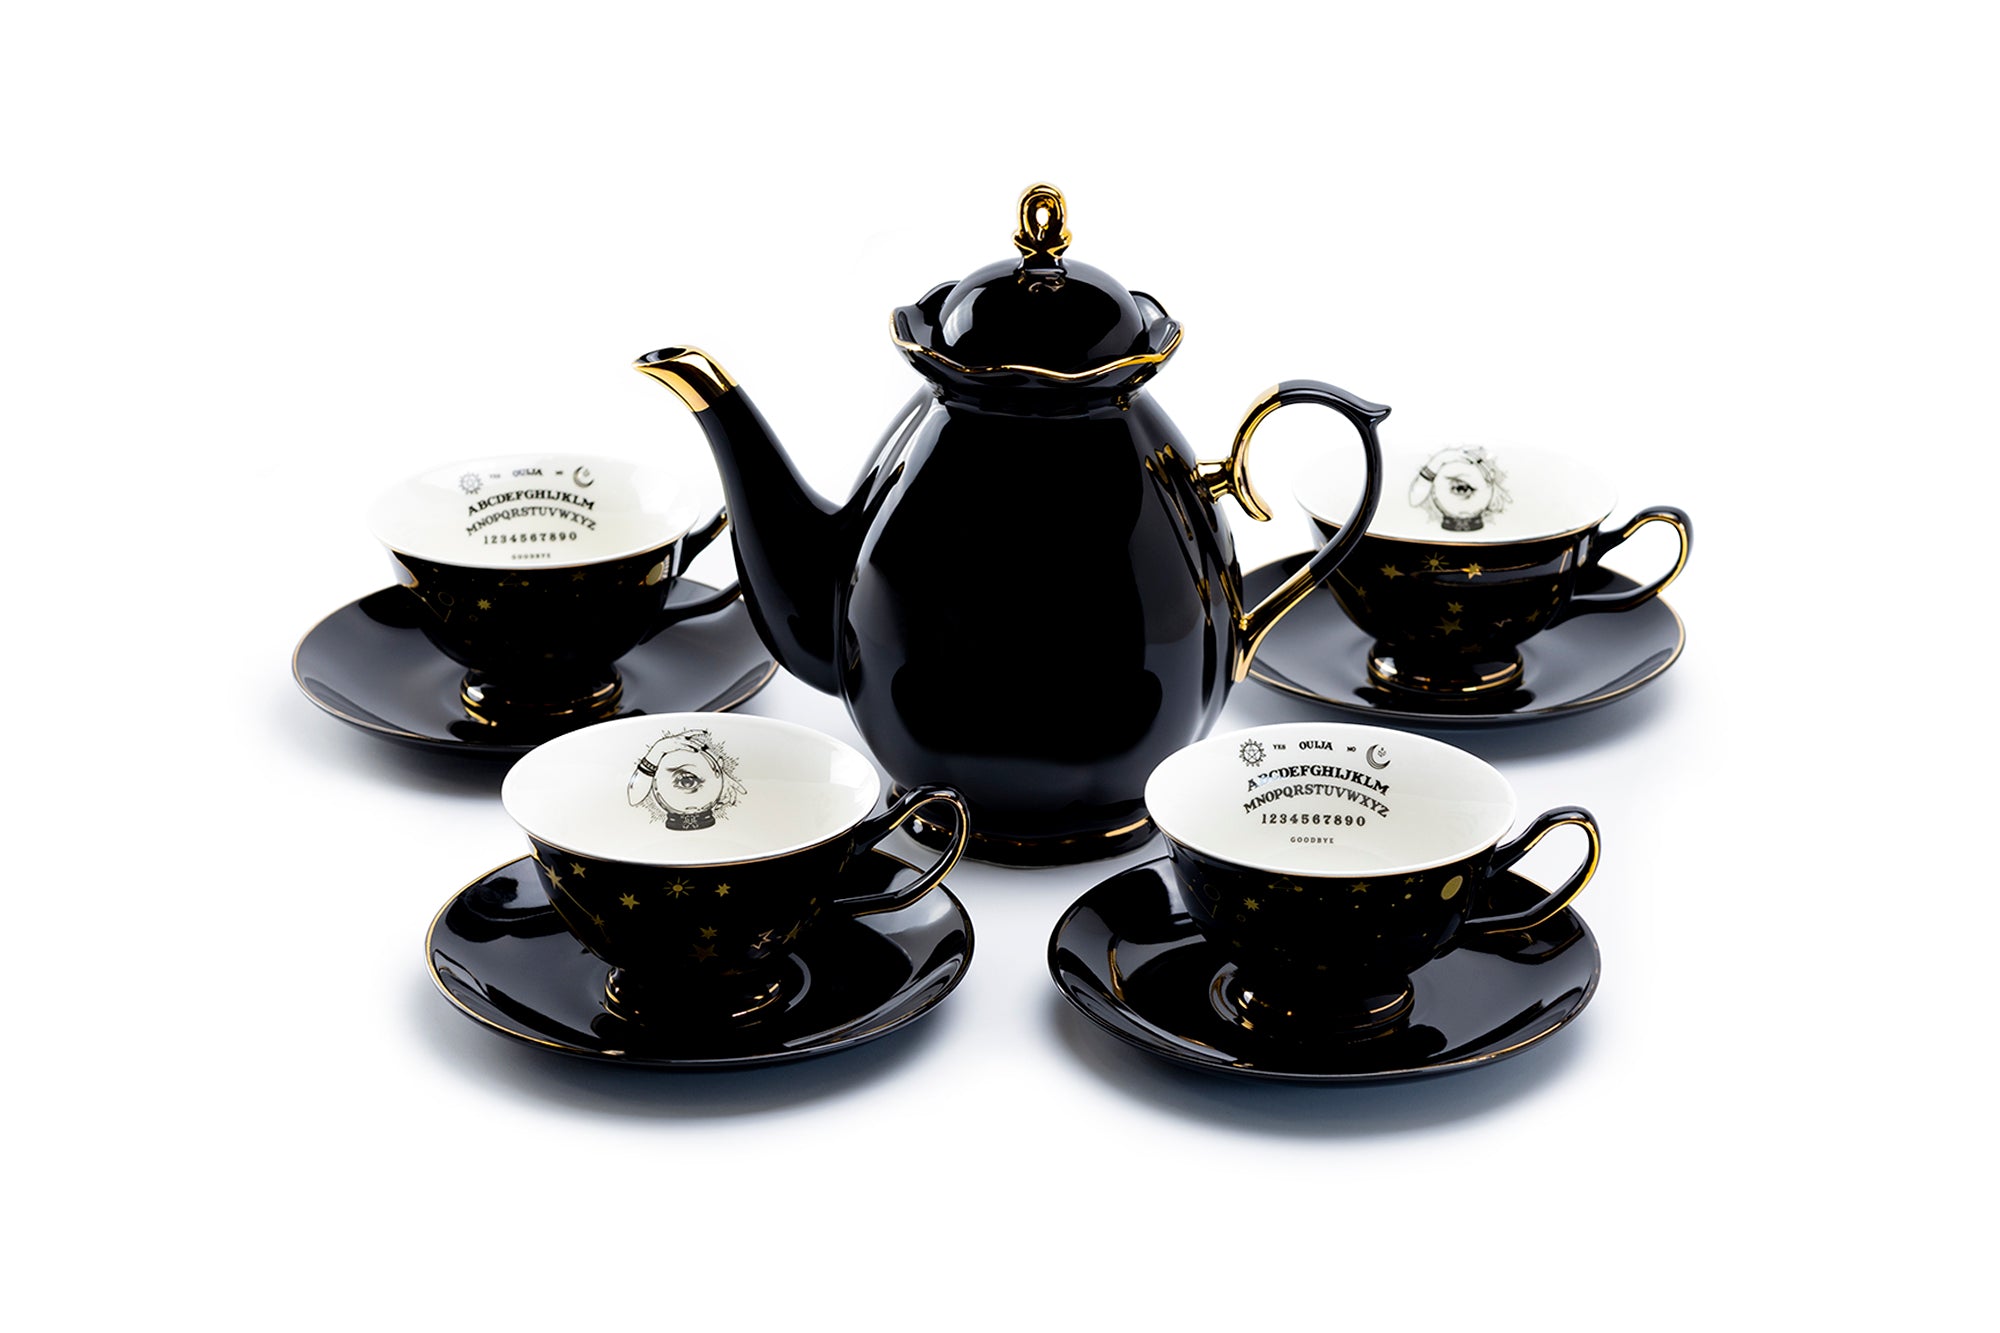 London Pottery Globe 4 Cup Teapot Gloss Black - Aldiss